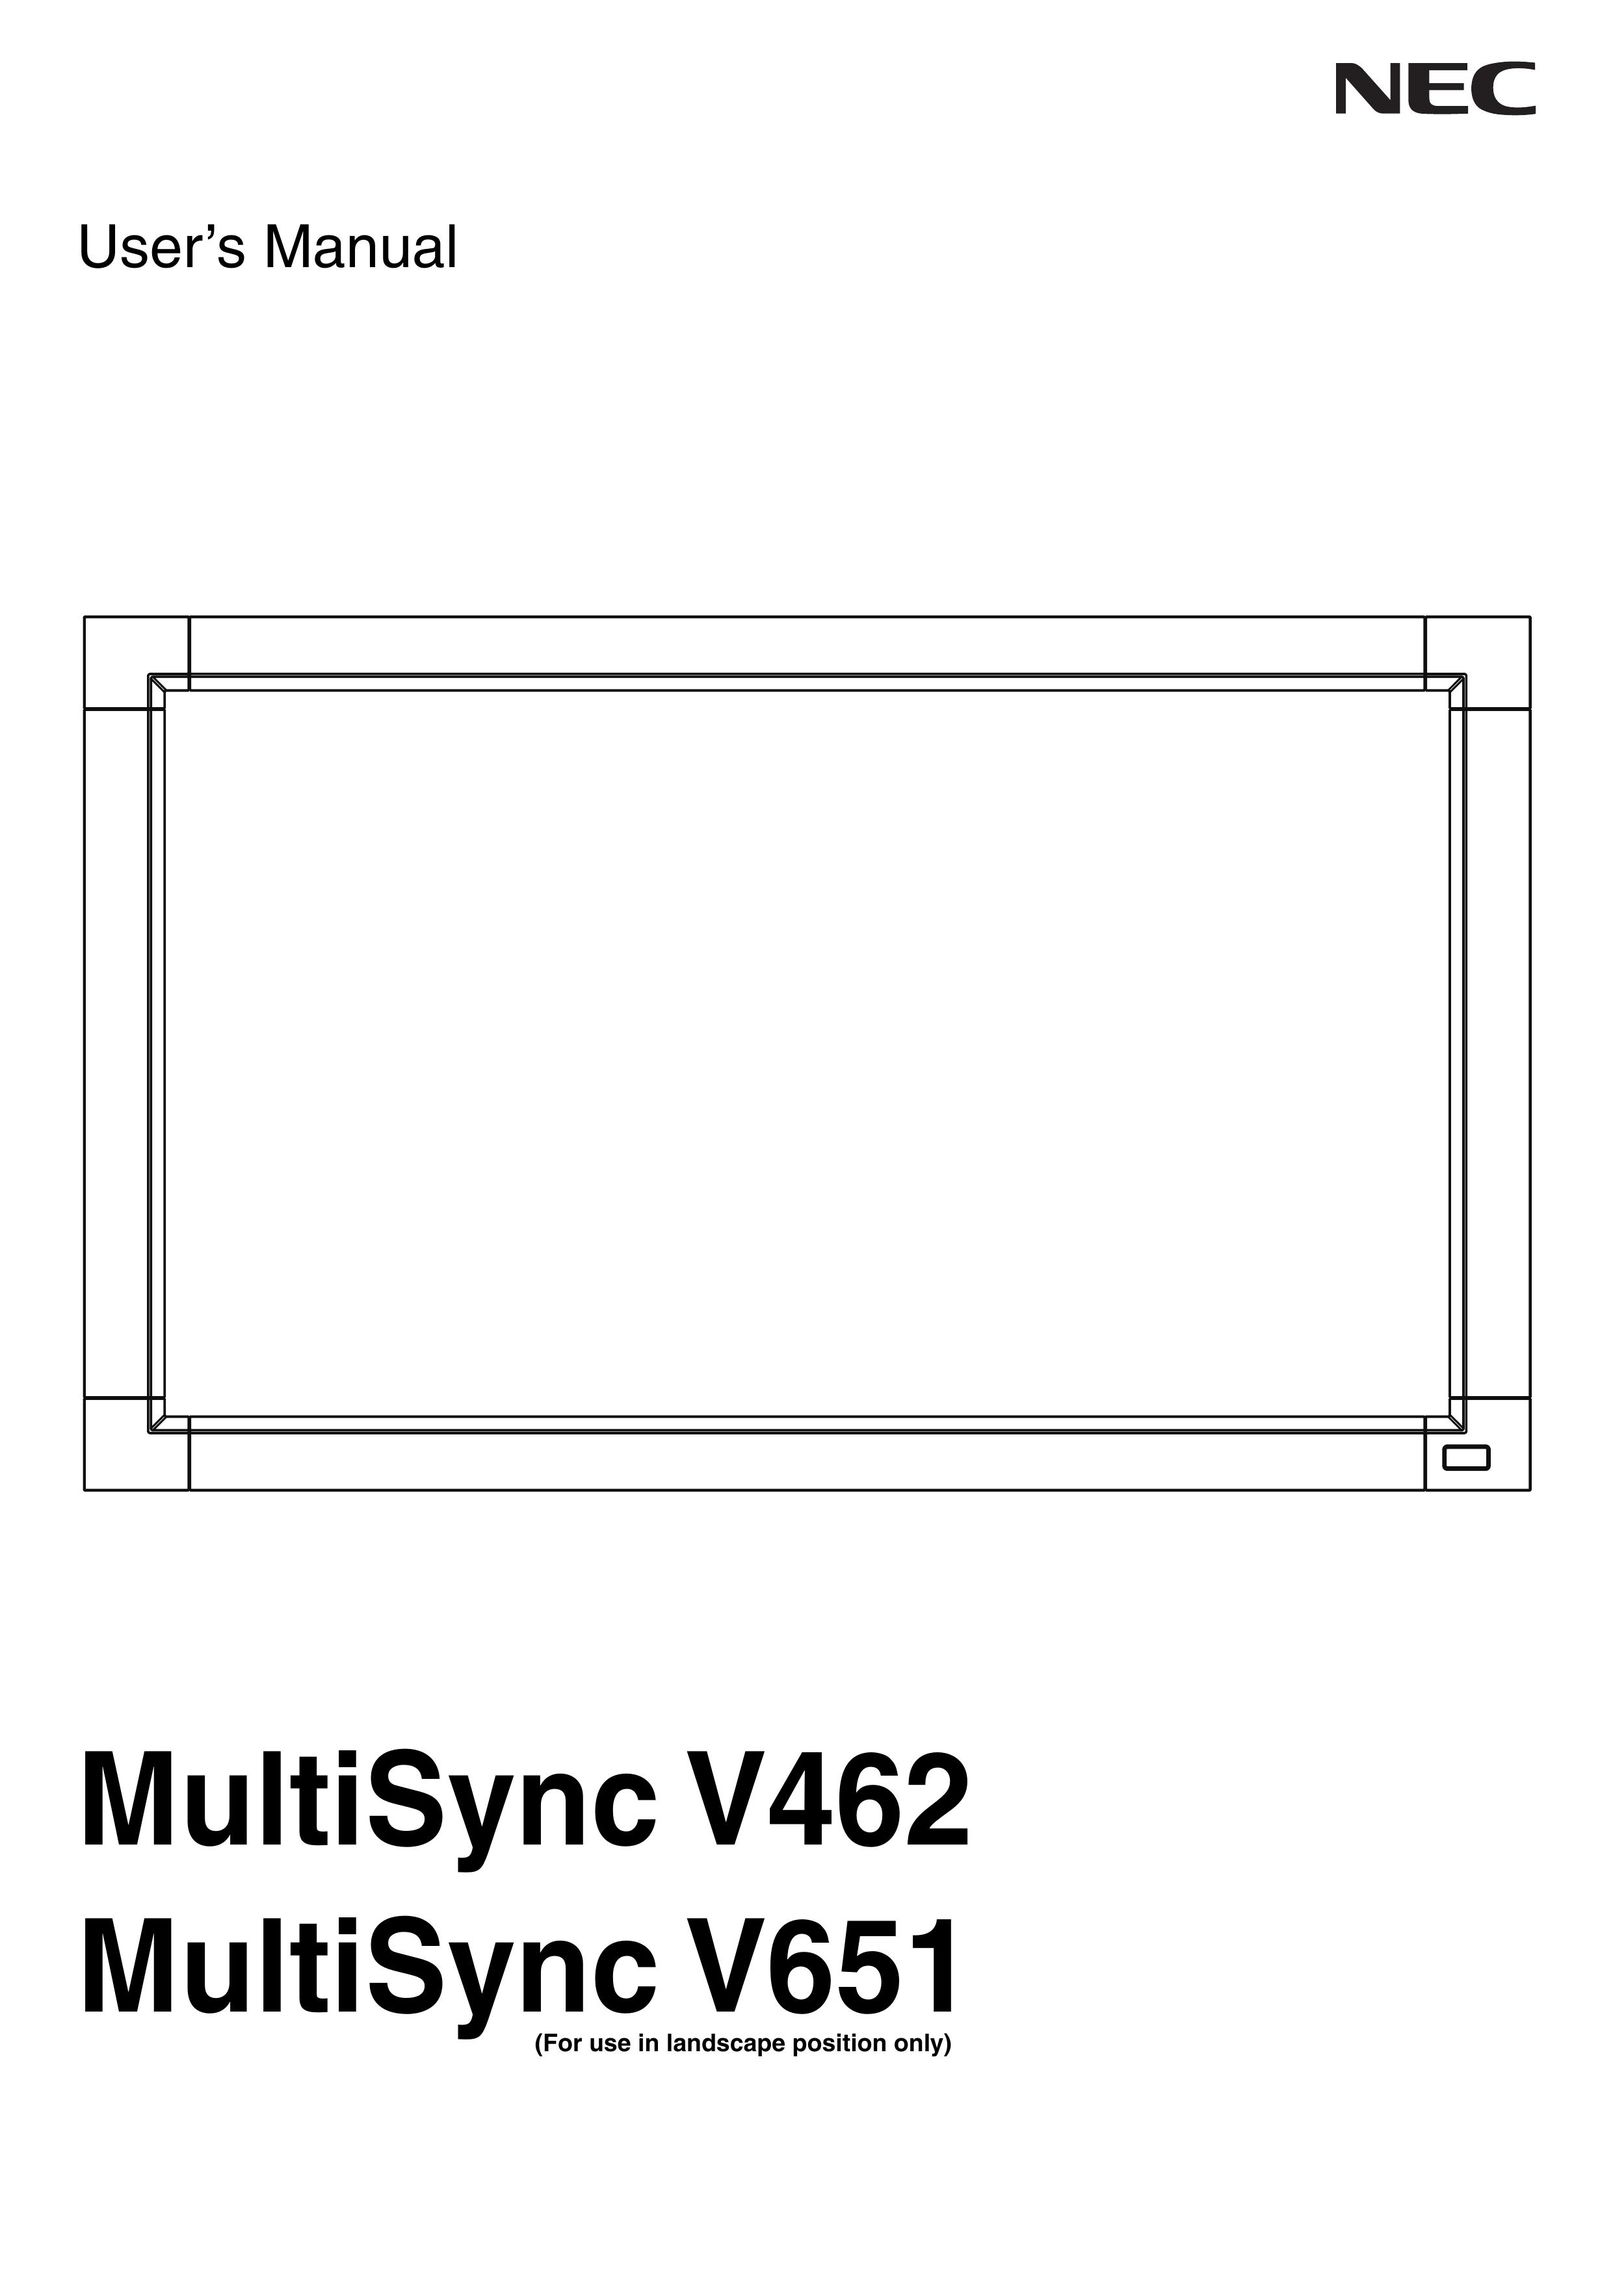 NEC V651 Home Theater Screen User Manual